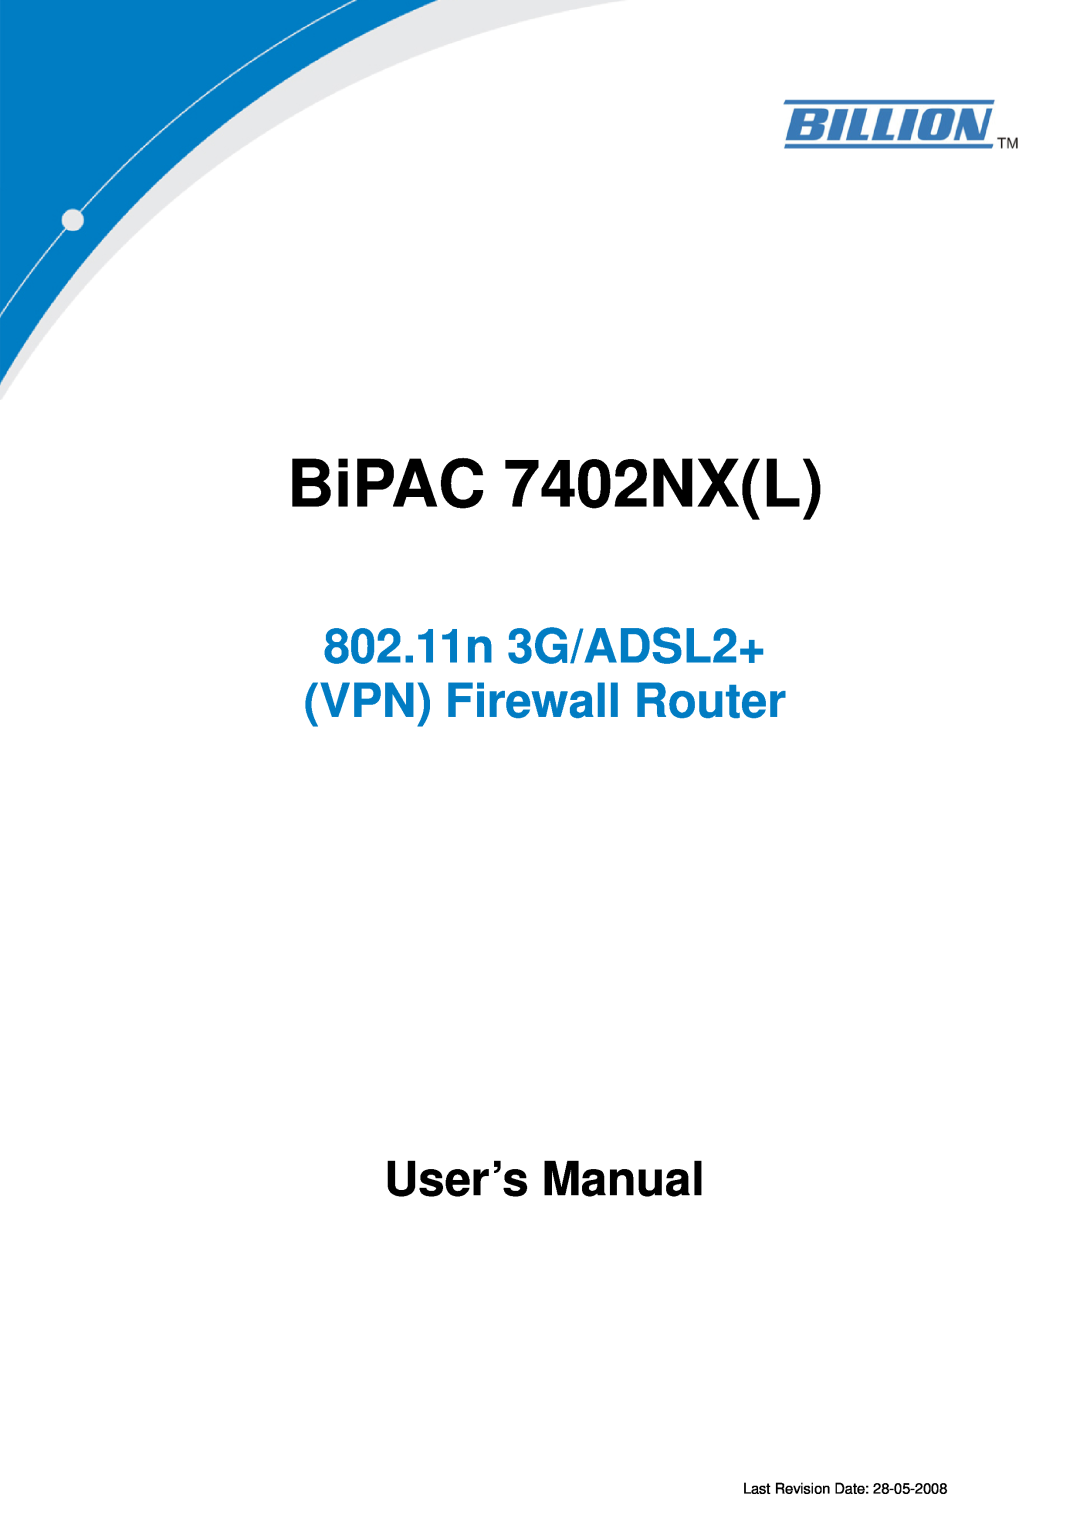 Billion Electric Company user manual BiPAC 7402NXL, 802.11n 3G/ADSL2+ VPN Firewall Router, User’s Manual 